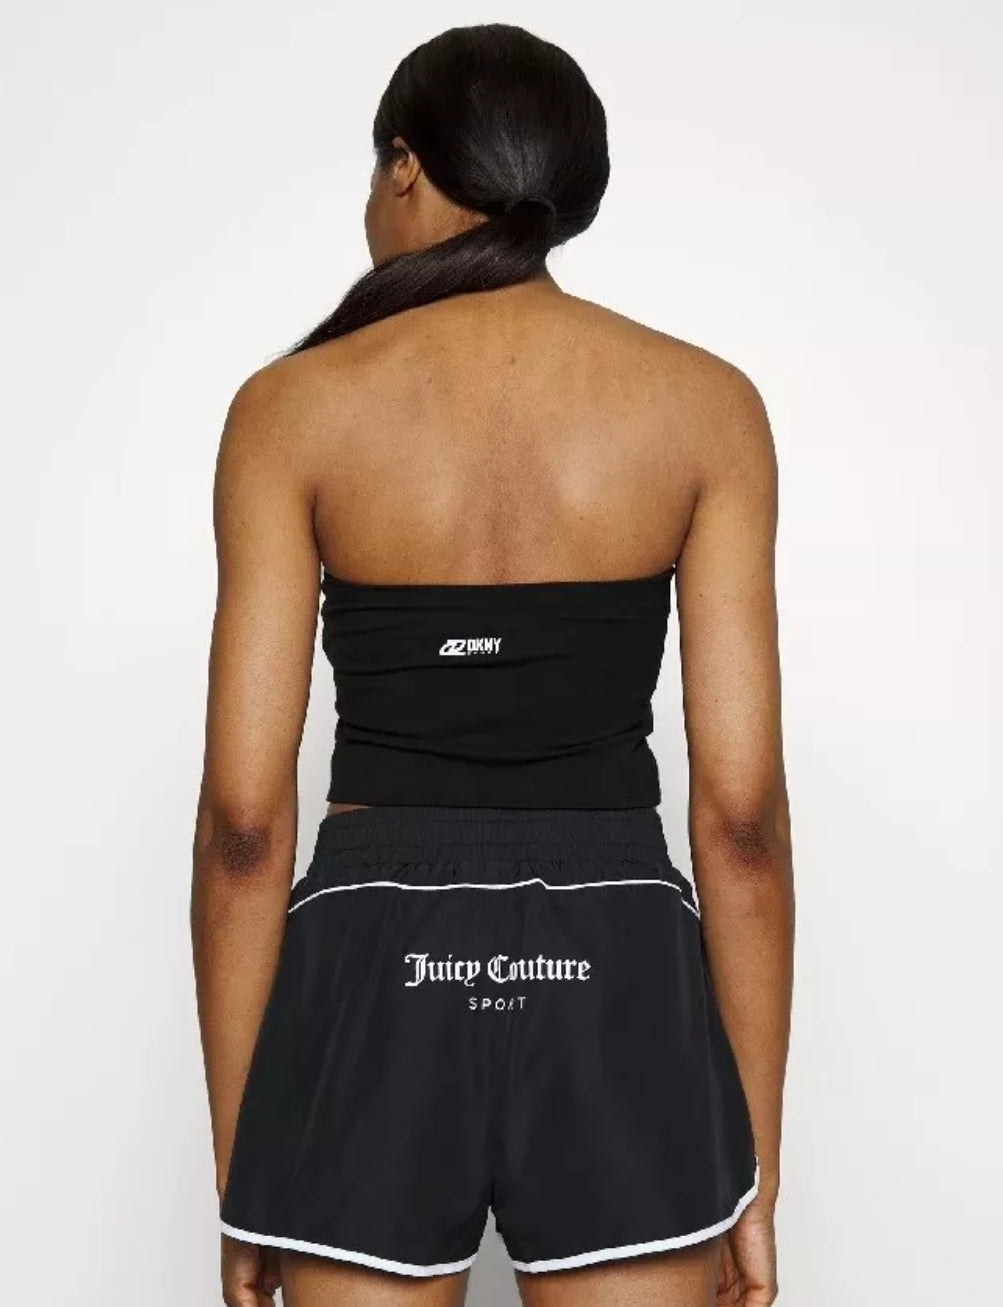 DKNY Sport Women's Exploded Sport Outline Logo Tube Top Black Size Large L Dresses by Brands Overstock | Brands Overstock